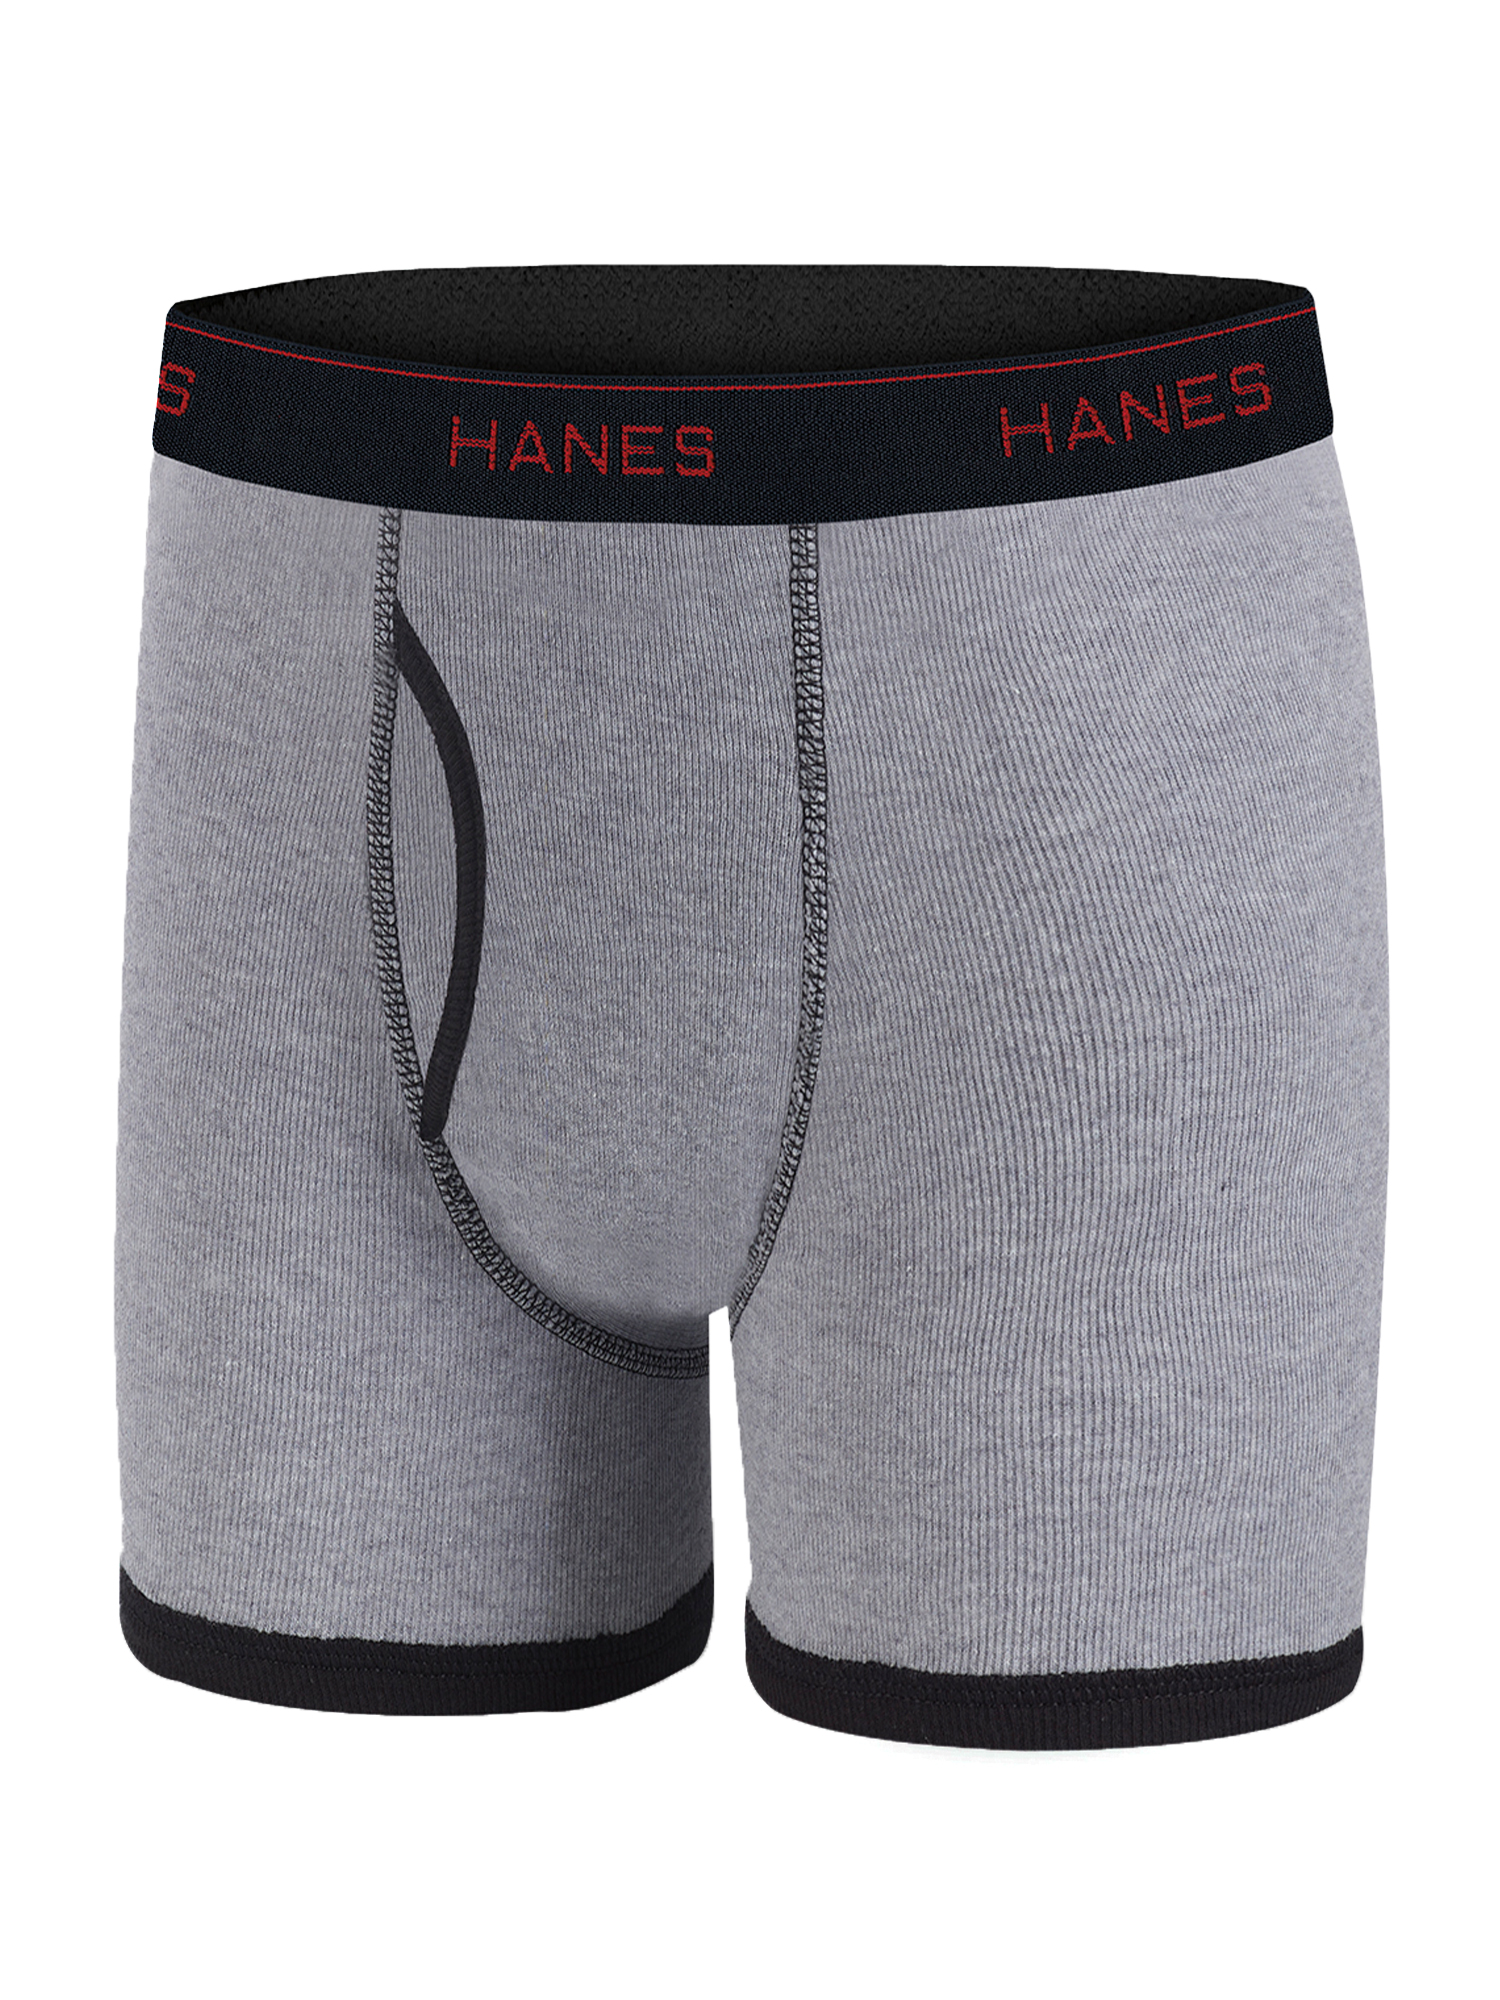 Hanes Boys Underwear, Comfort Flex Boxer Briefs, 5+2 Bonus Pack, Sizes S-XL - image 2 of 4